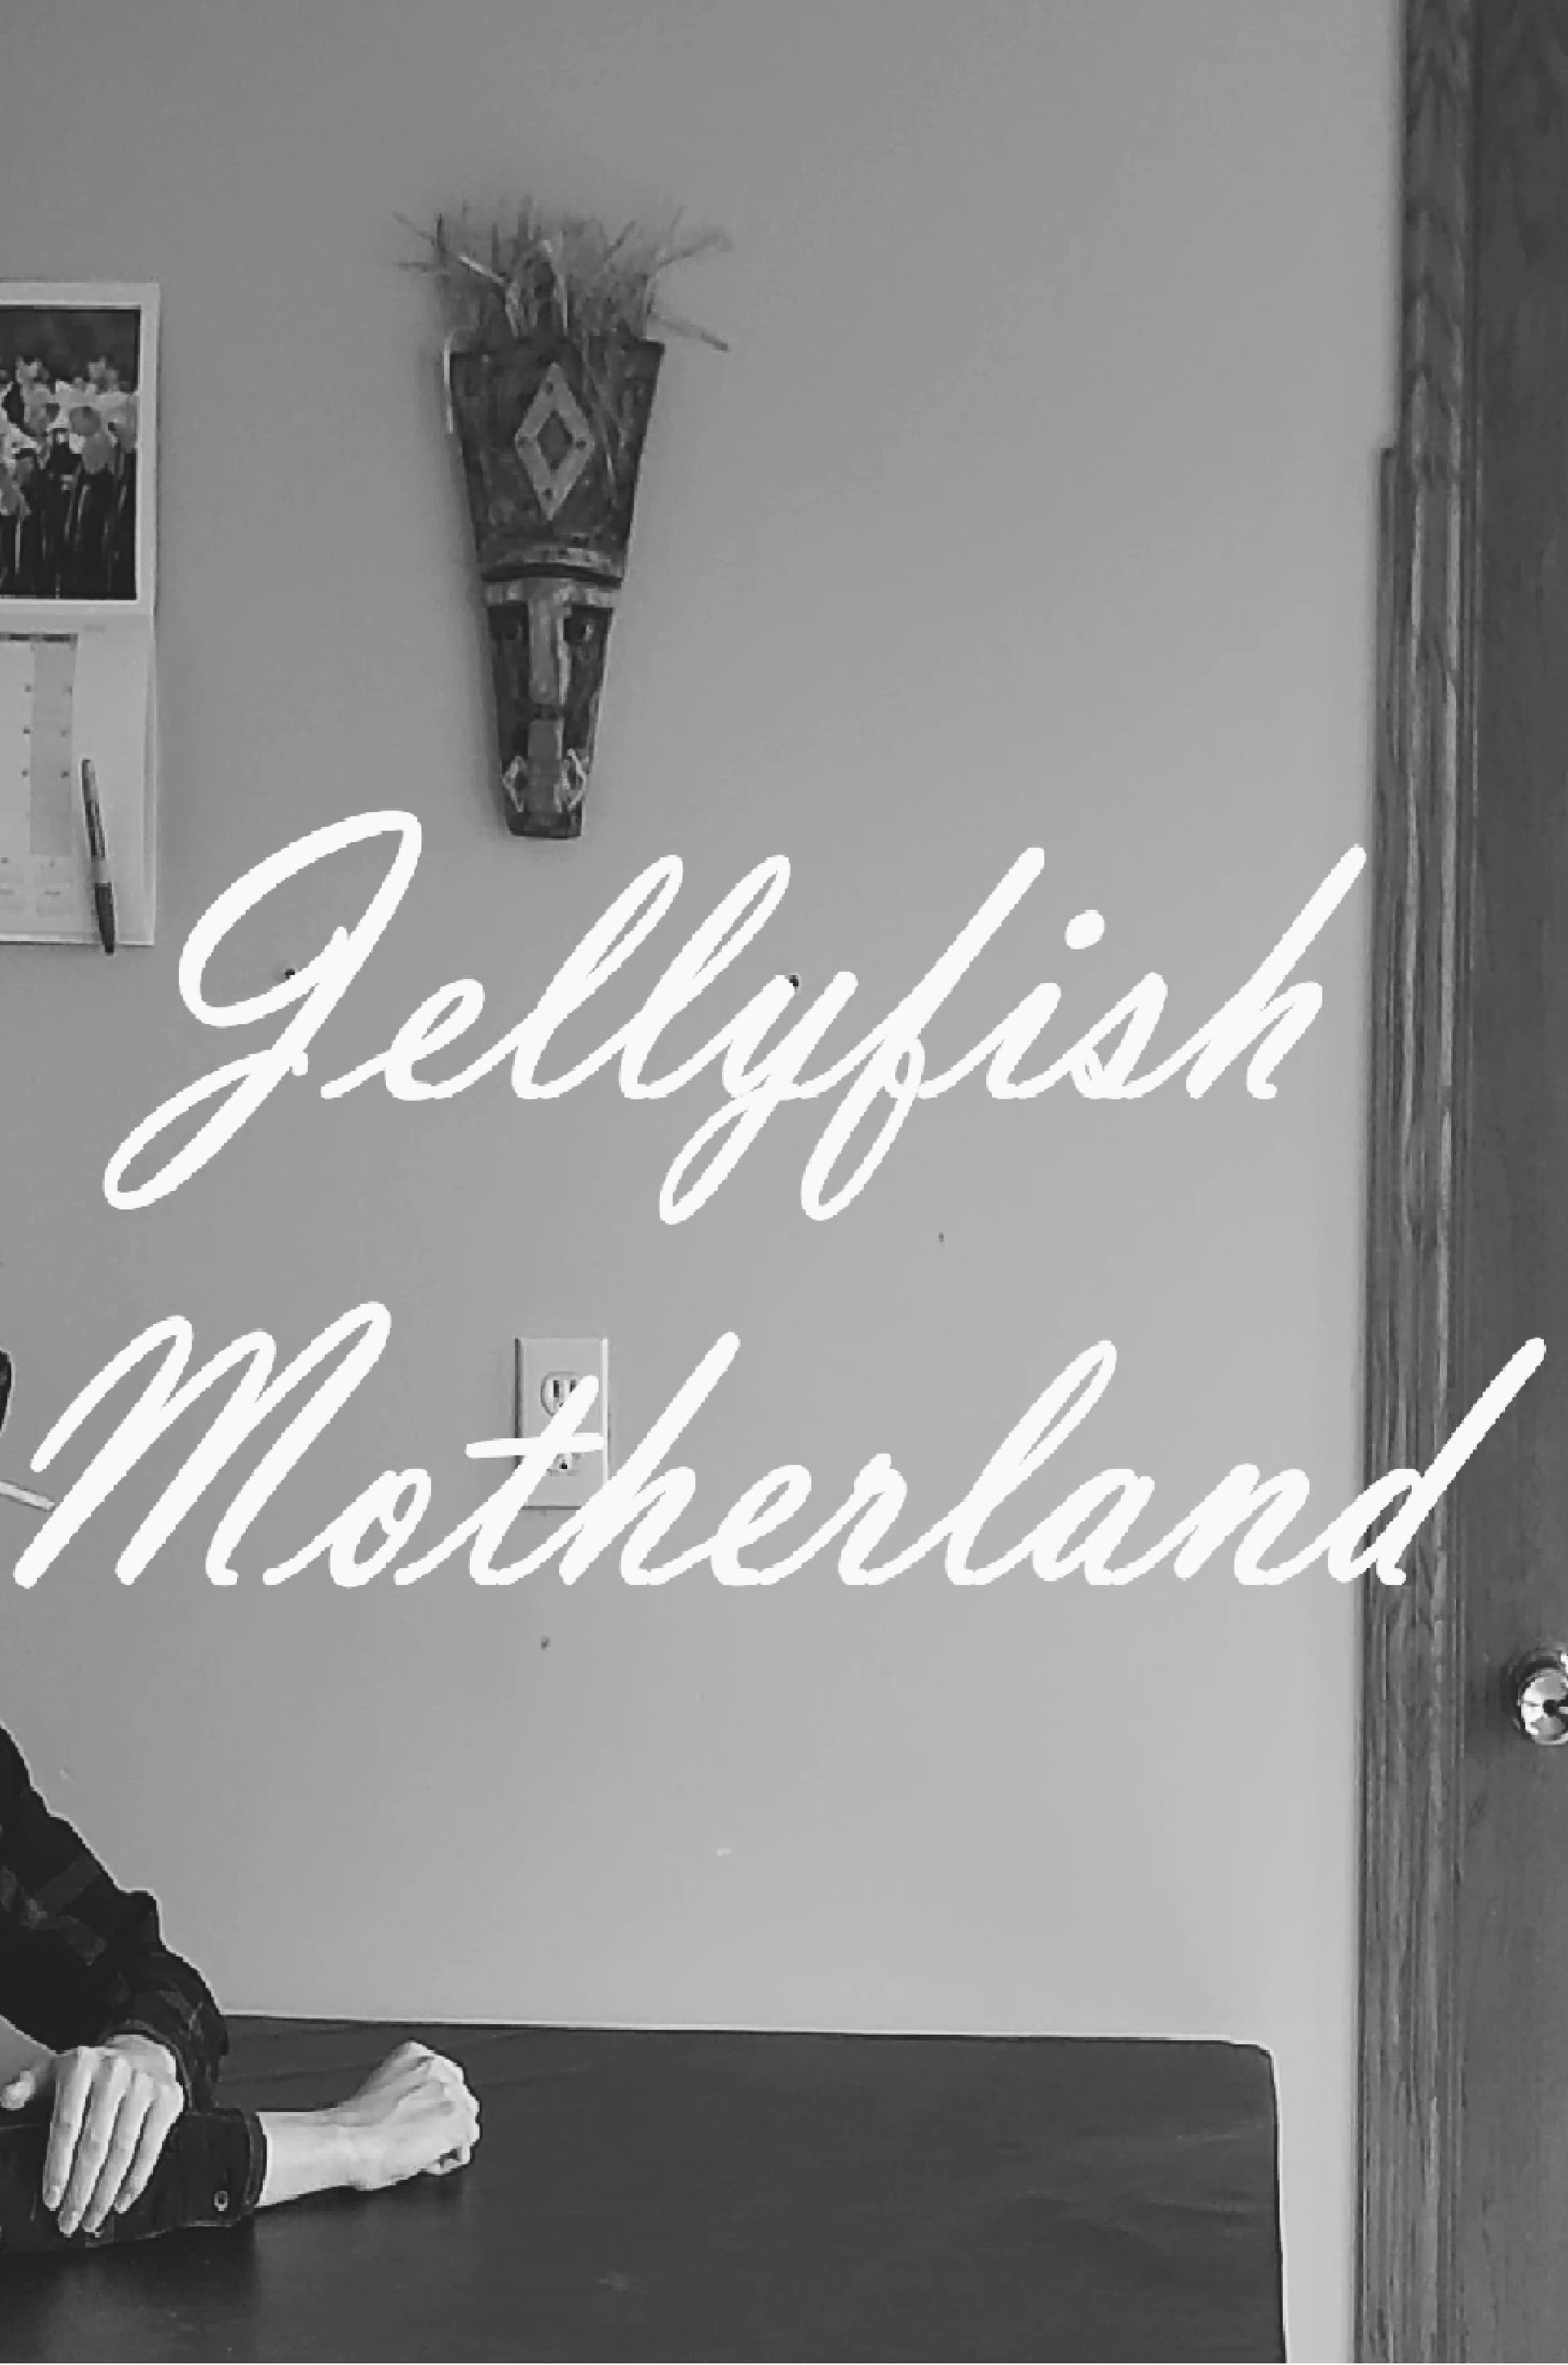 Jellyfish Motherland